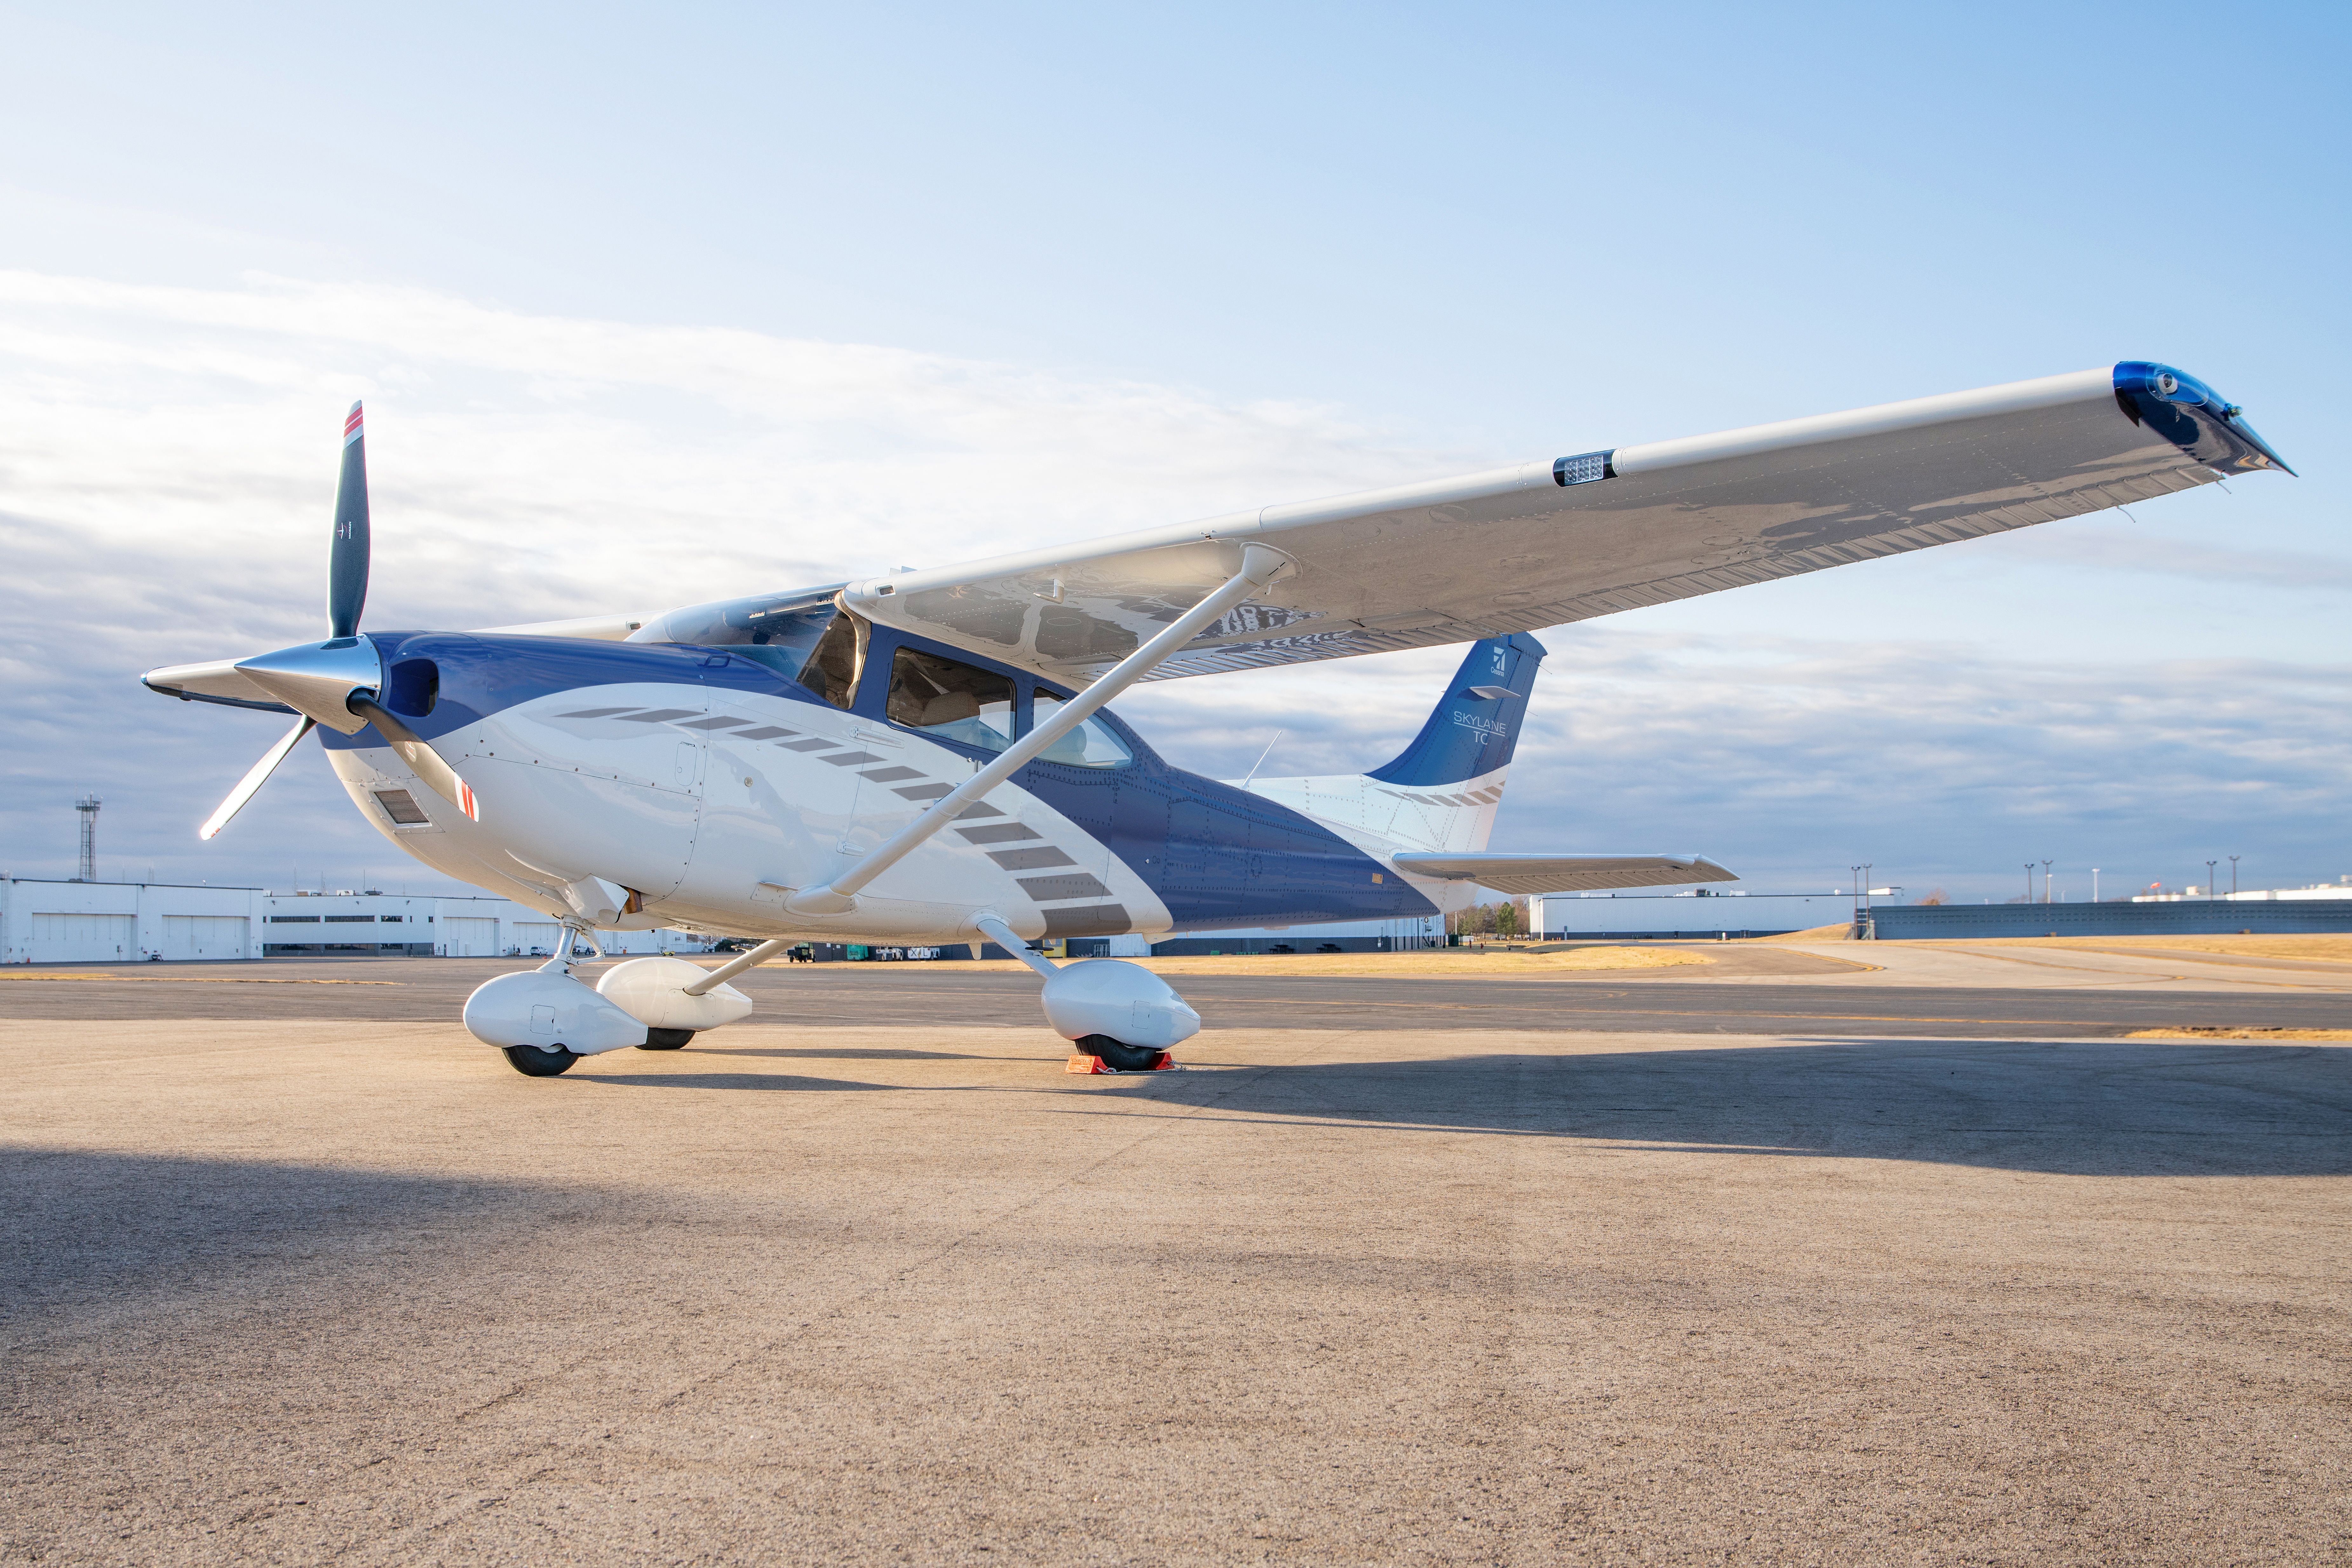 Cessna Turbo Skylane sitting on a tarmac